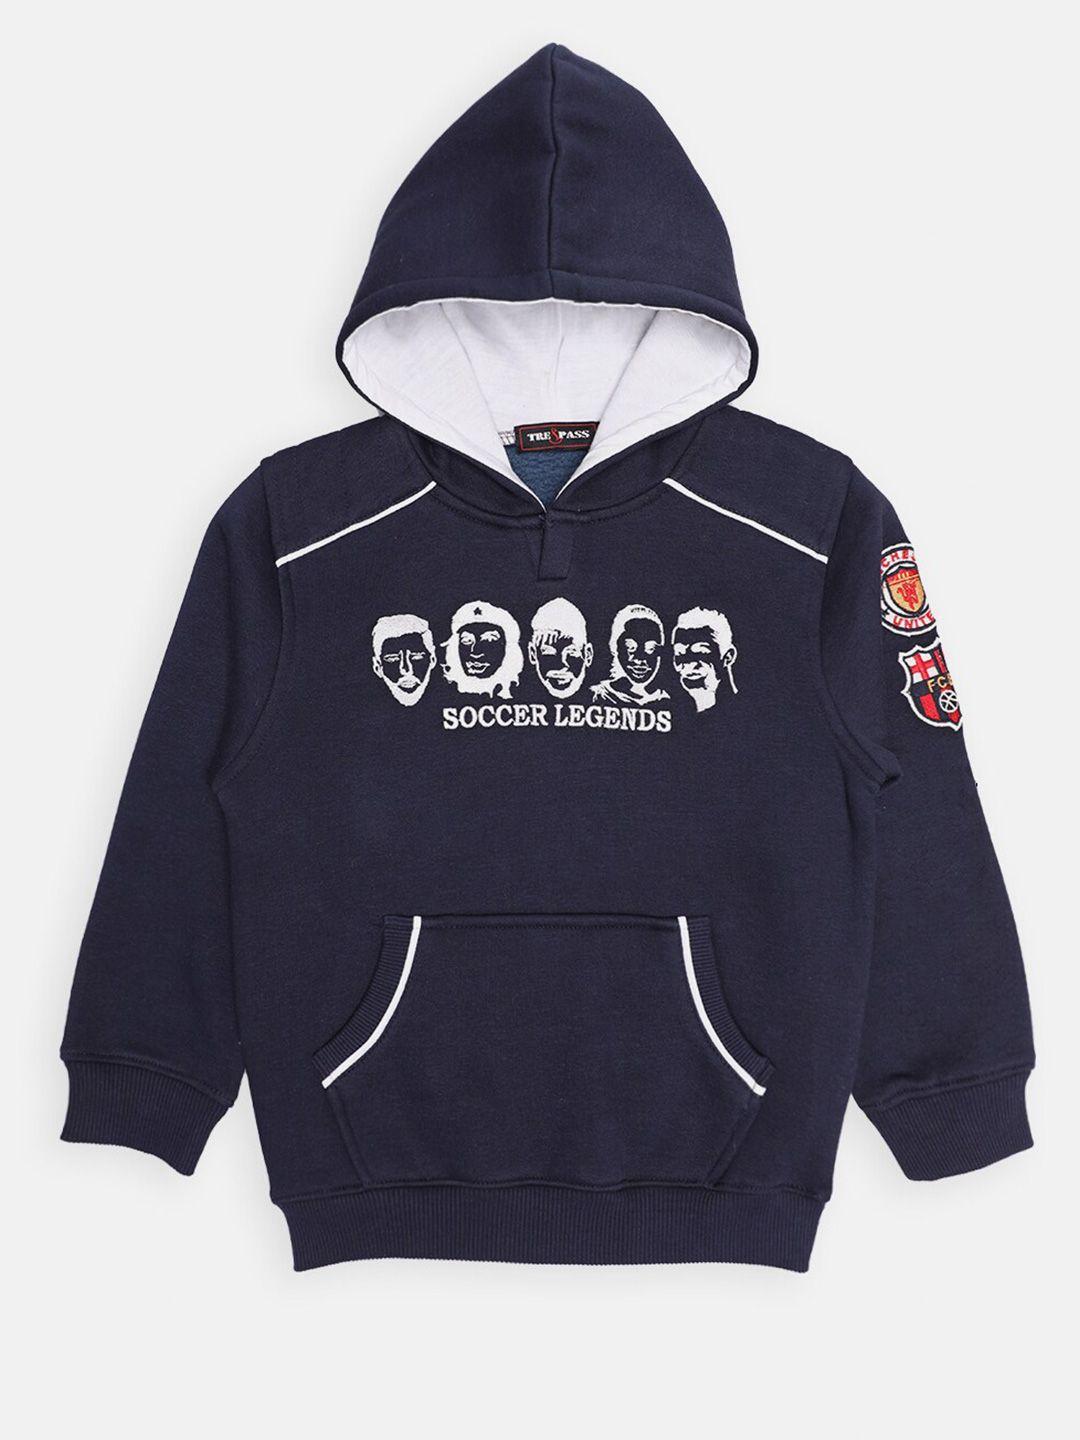 tre&pass boys navy blue printed hooded sweatshirt